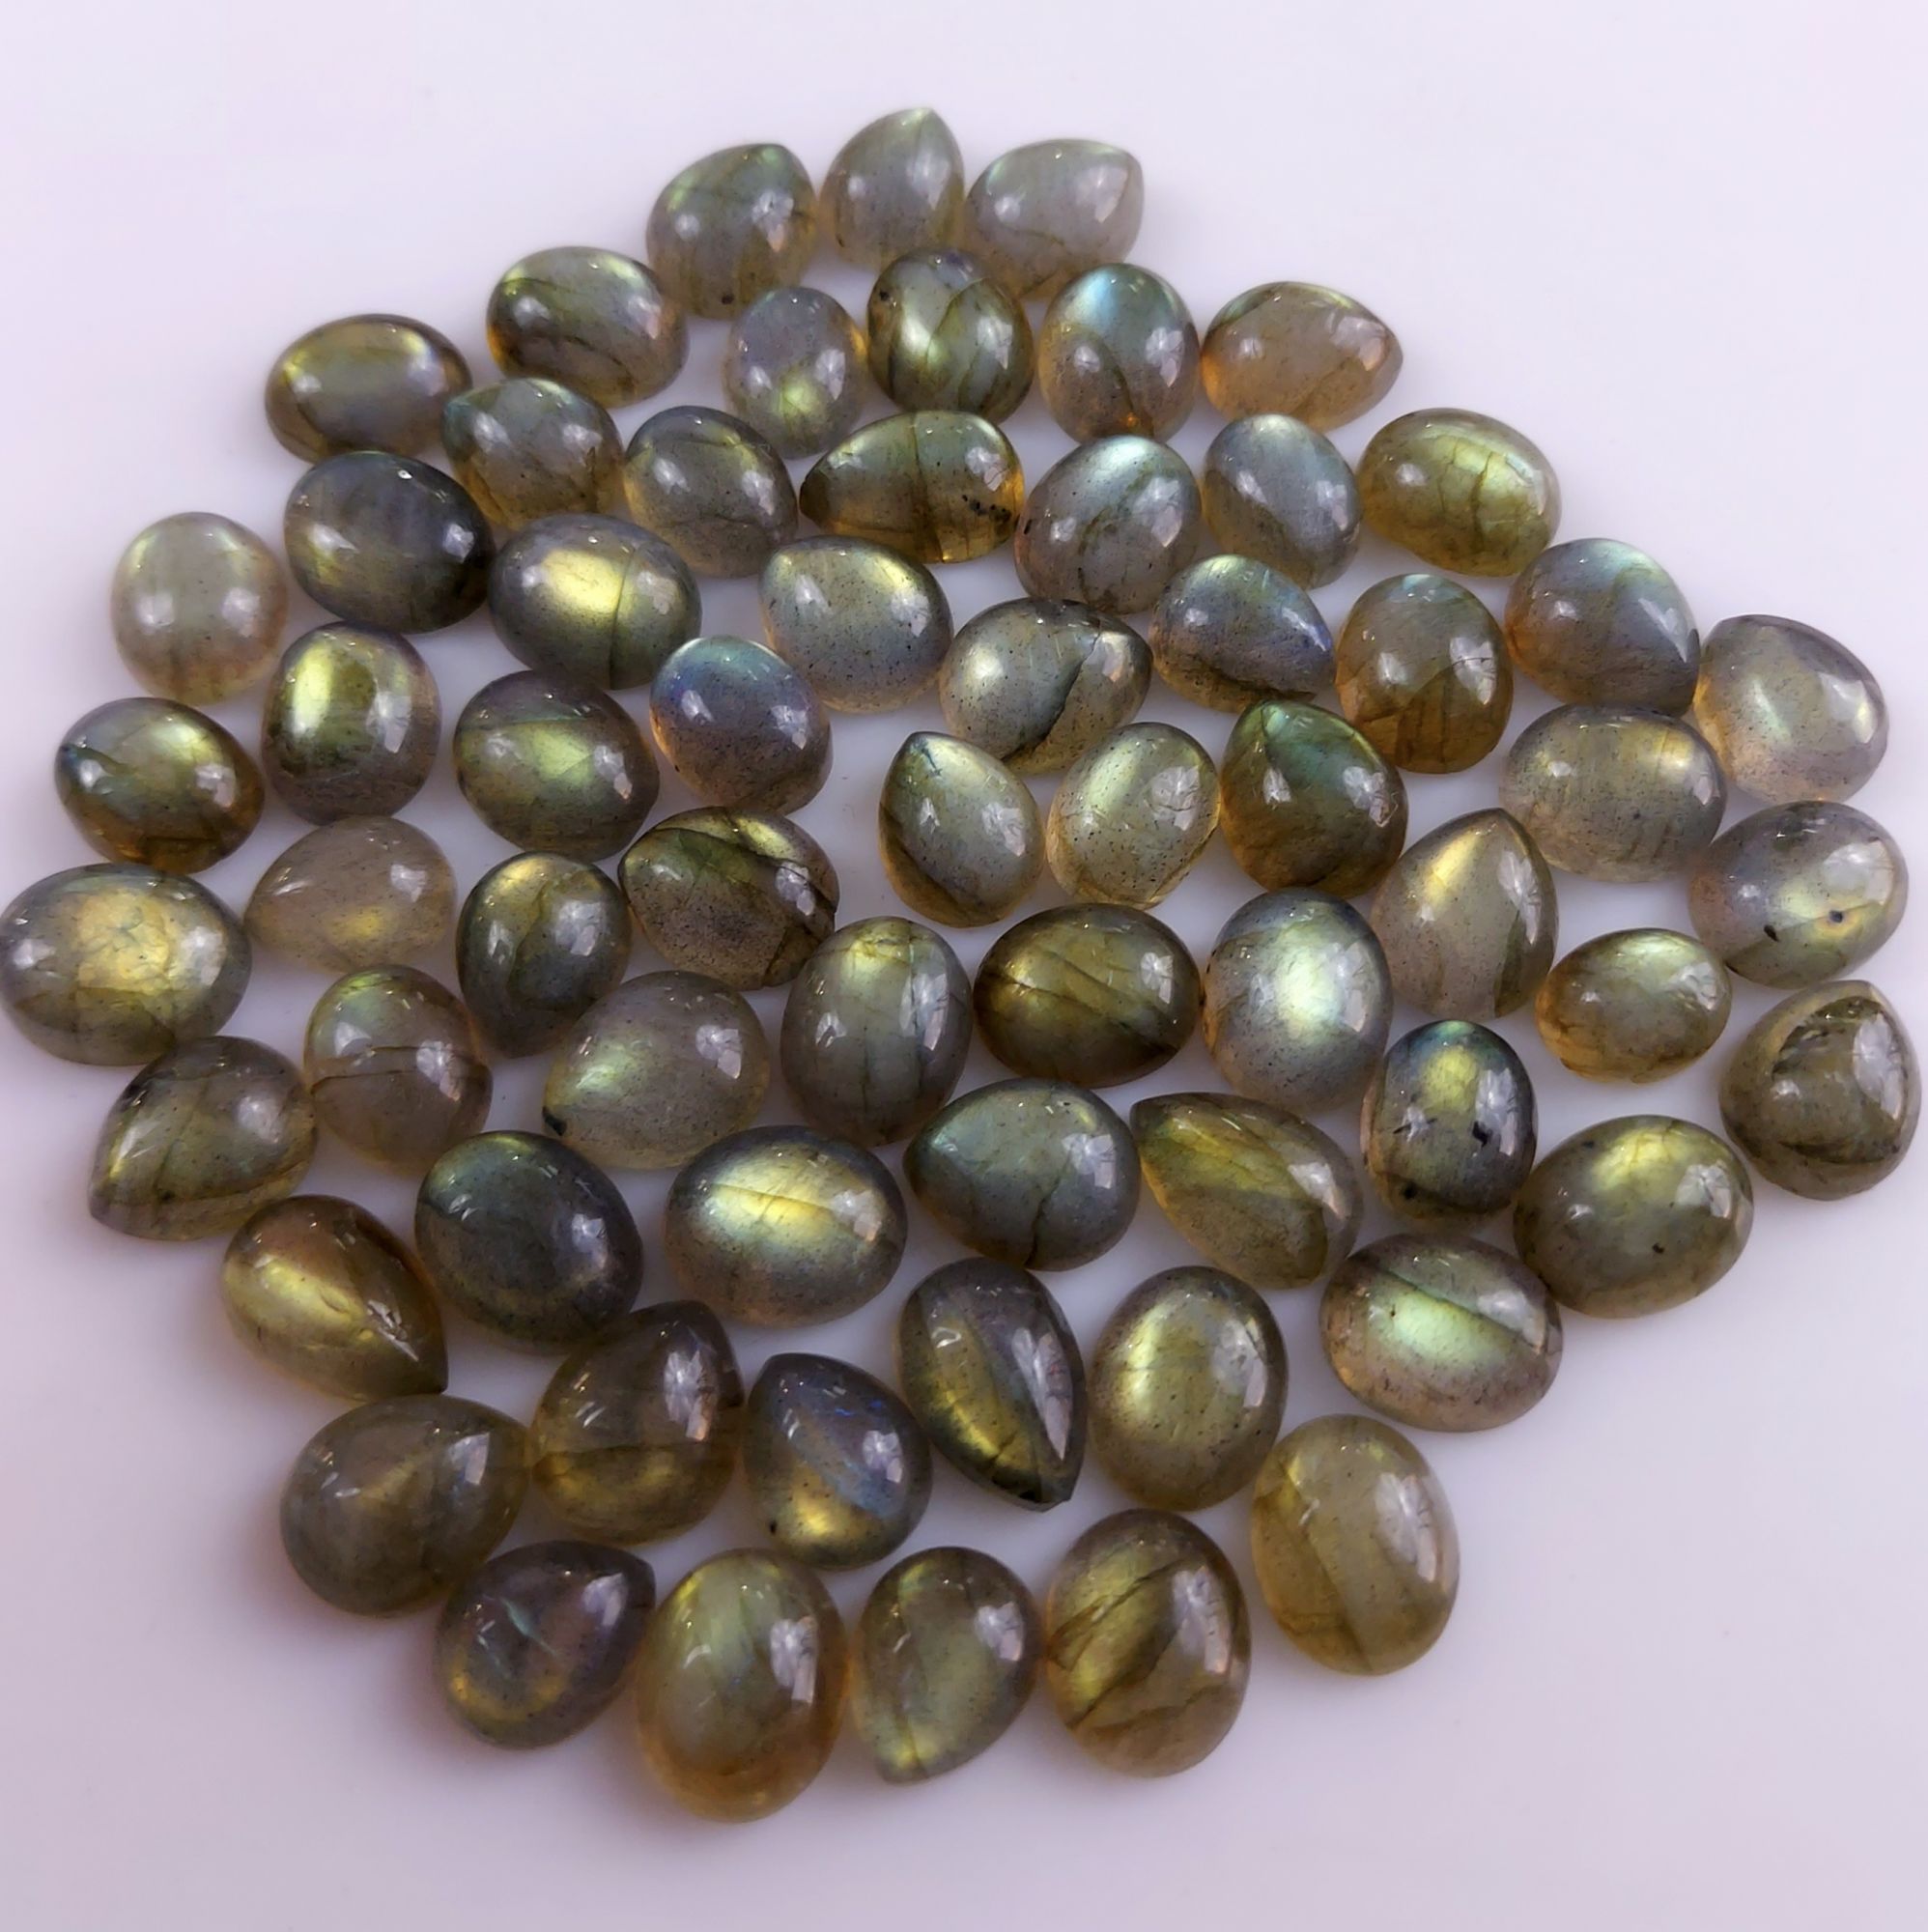 64 Pcs246Cts Natural Multifire Labradorite Loose Cabochon Gemstone Lot for Jewelry Making  10x6 8x6mm#1058